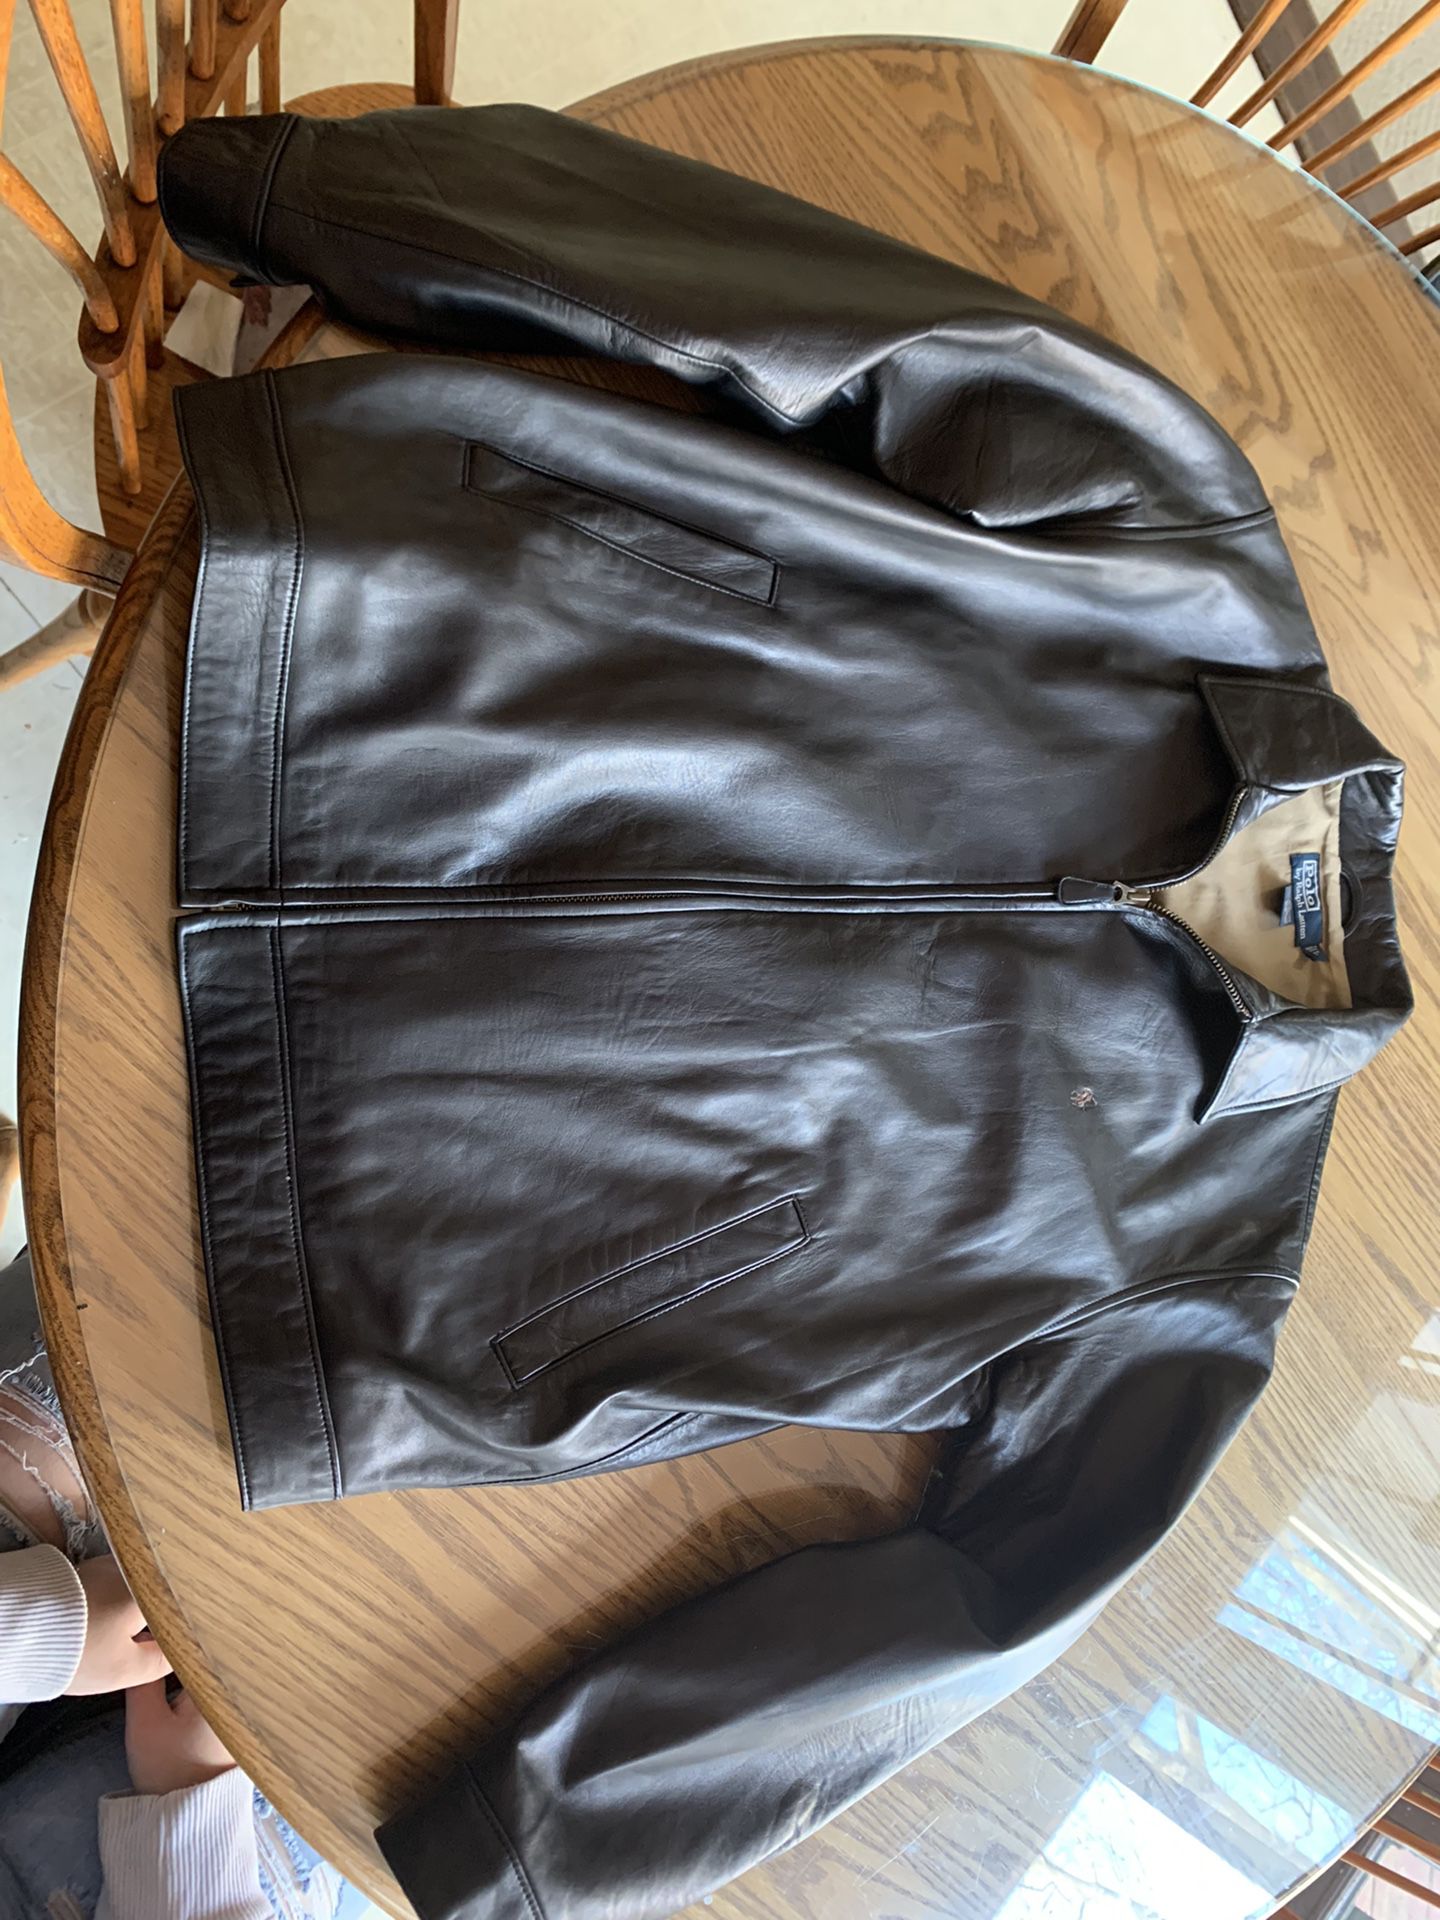 Polo Leather Jacket 